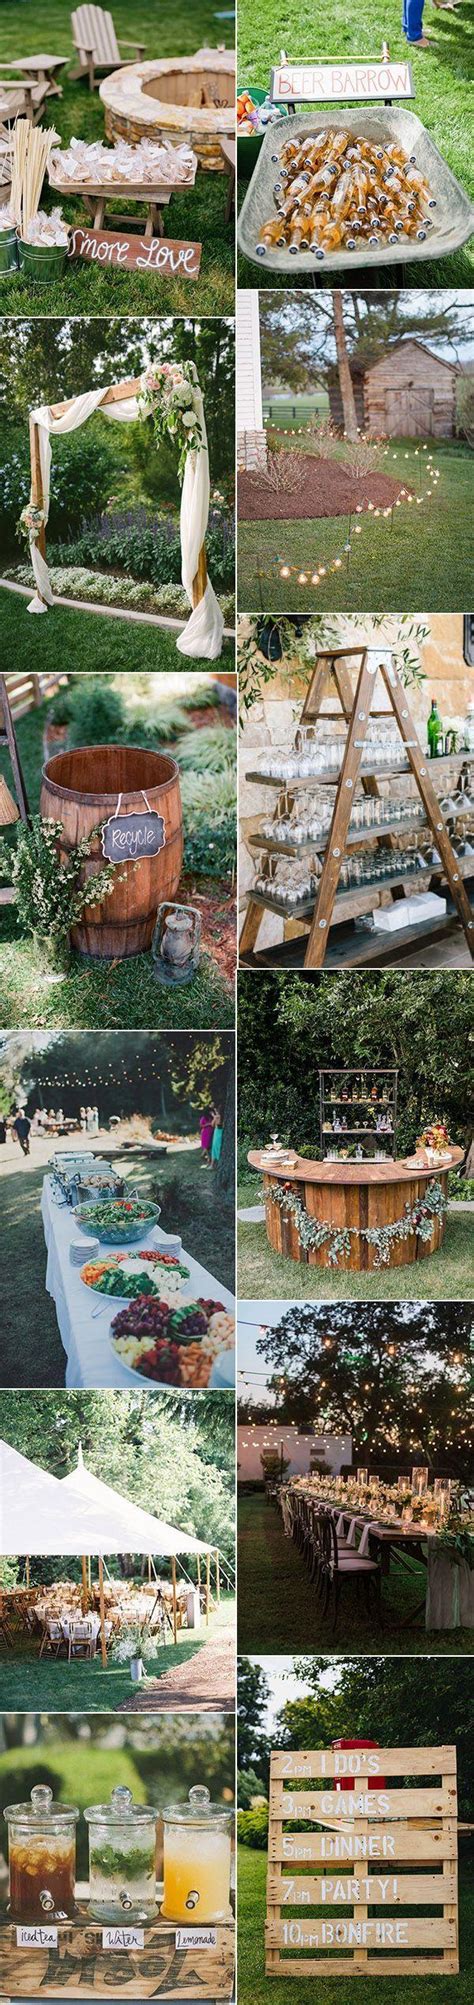 20 Great Backyard Wedding Ideas That Inspire 2745646 Weddbook